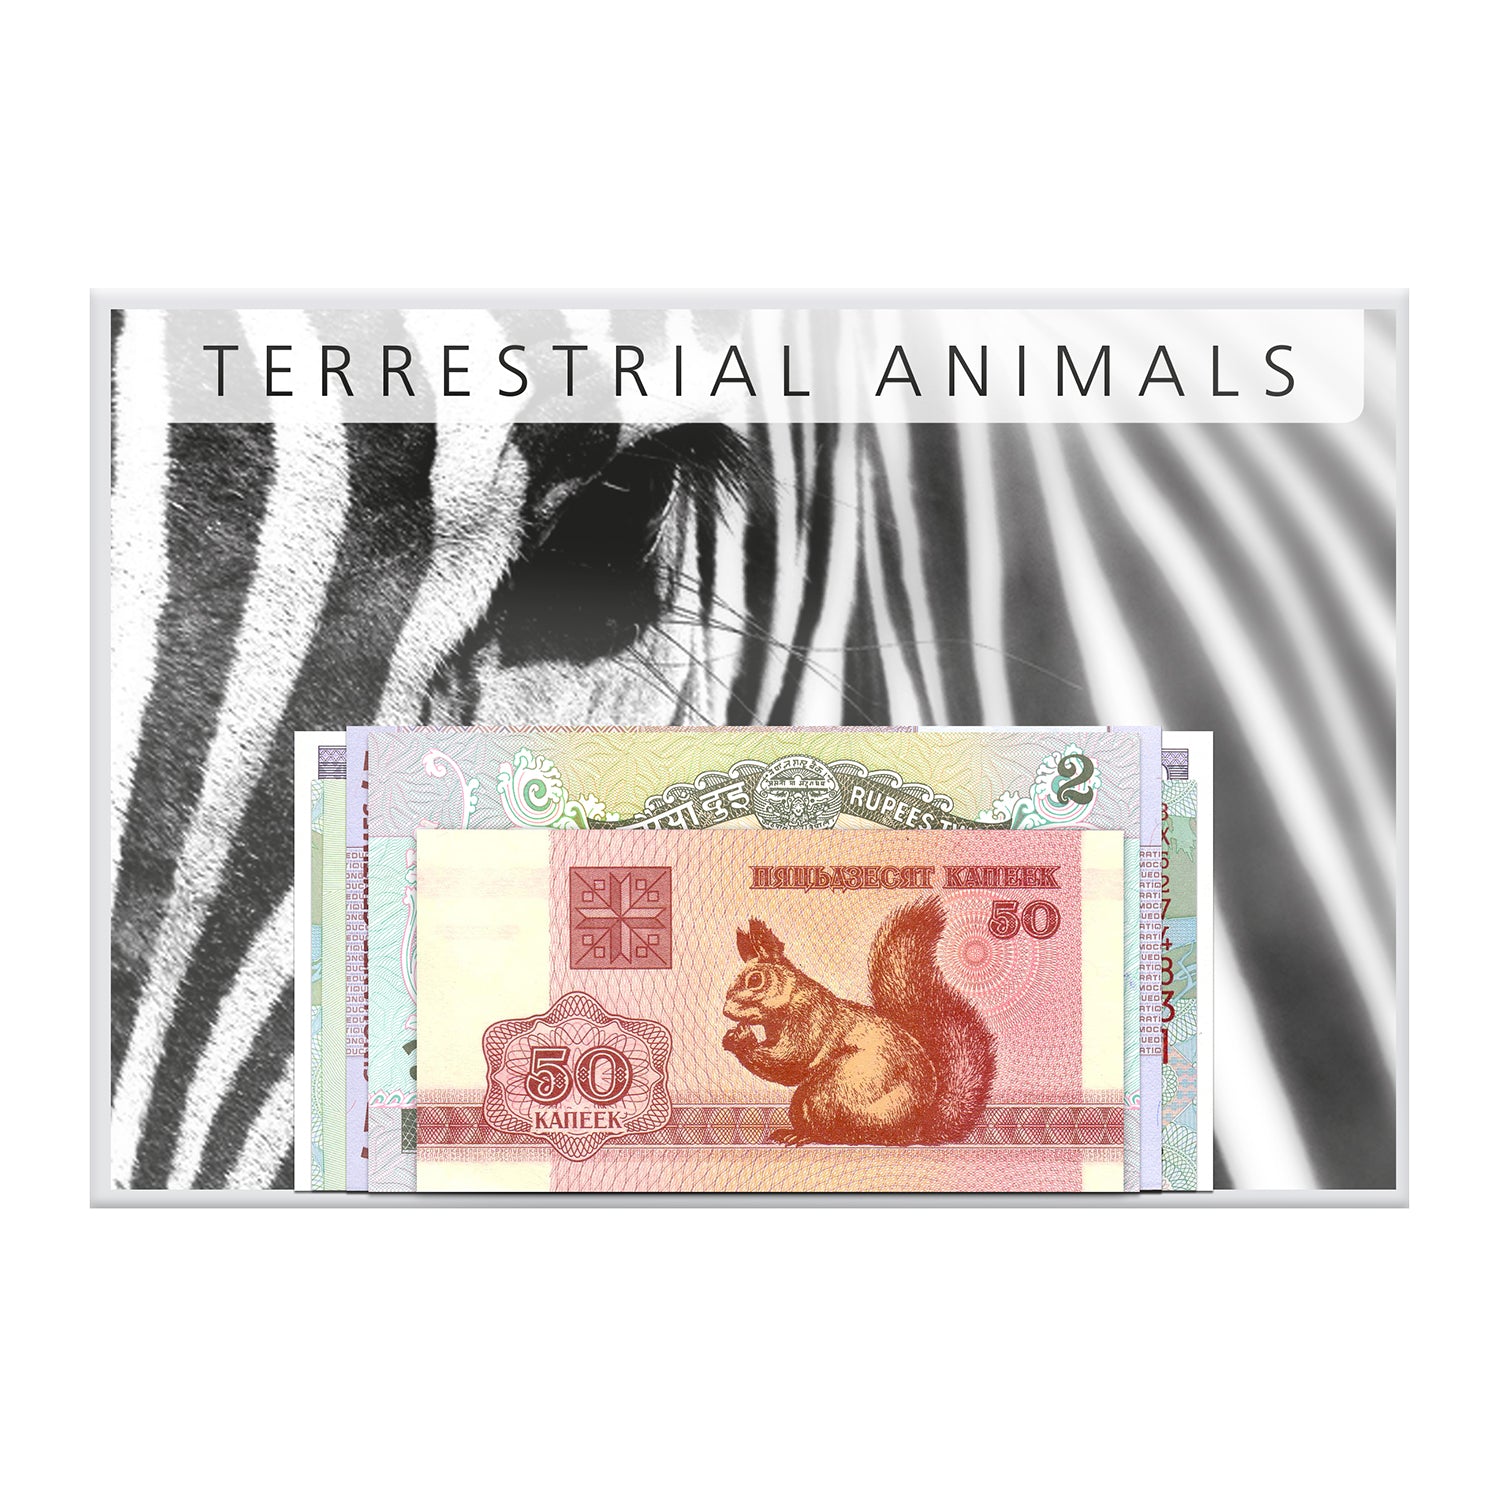 Banknote Collection "Terrestrial Animals"